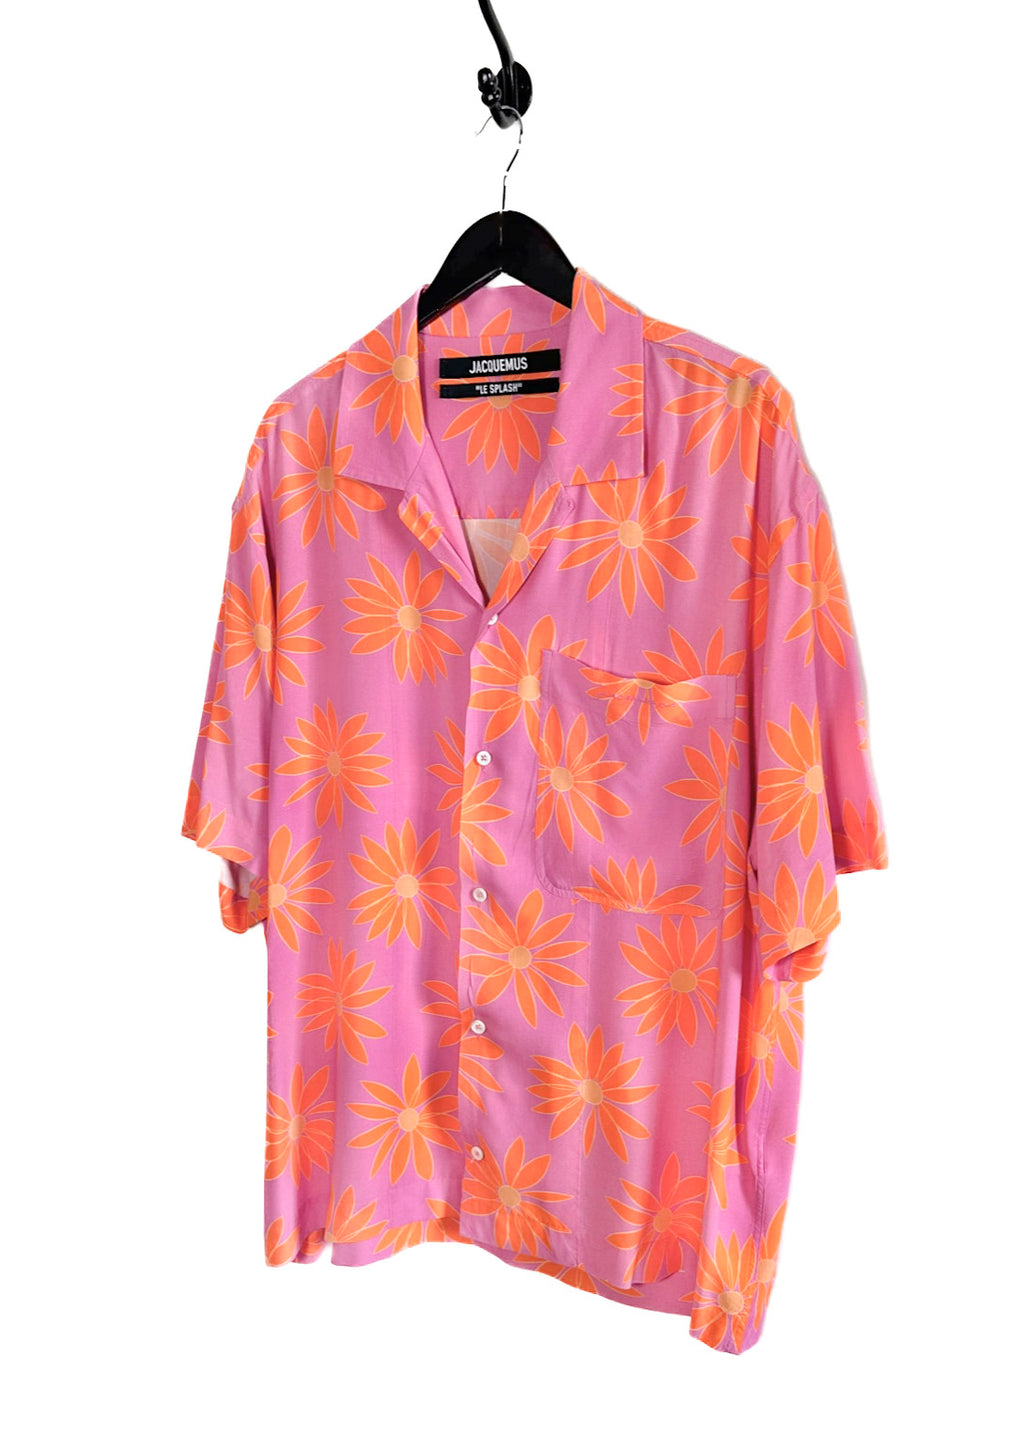 Jacquemus Le Splash Pink Flower Print Short Sleeve Shirt